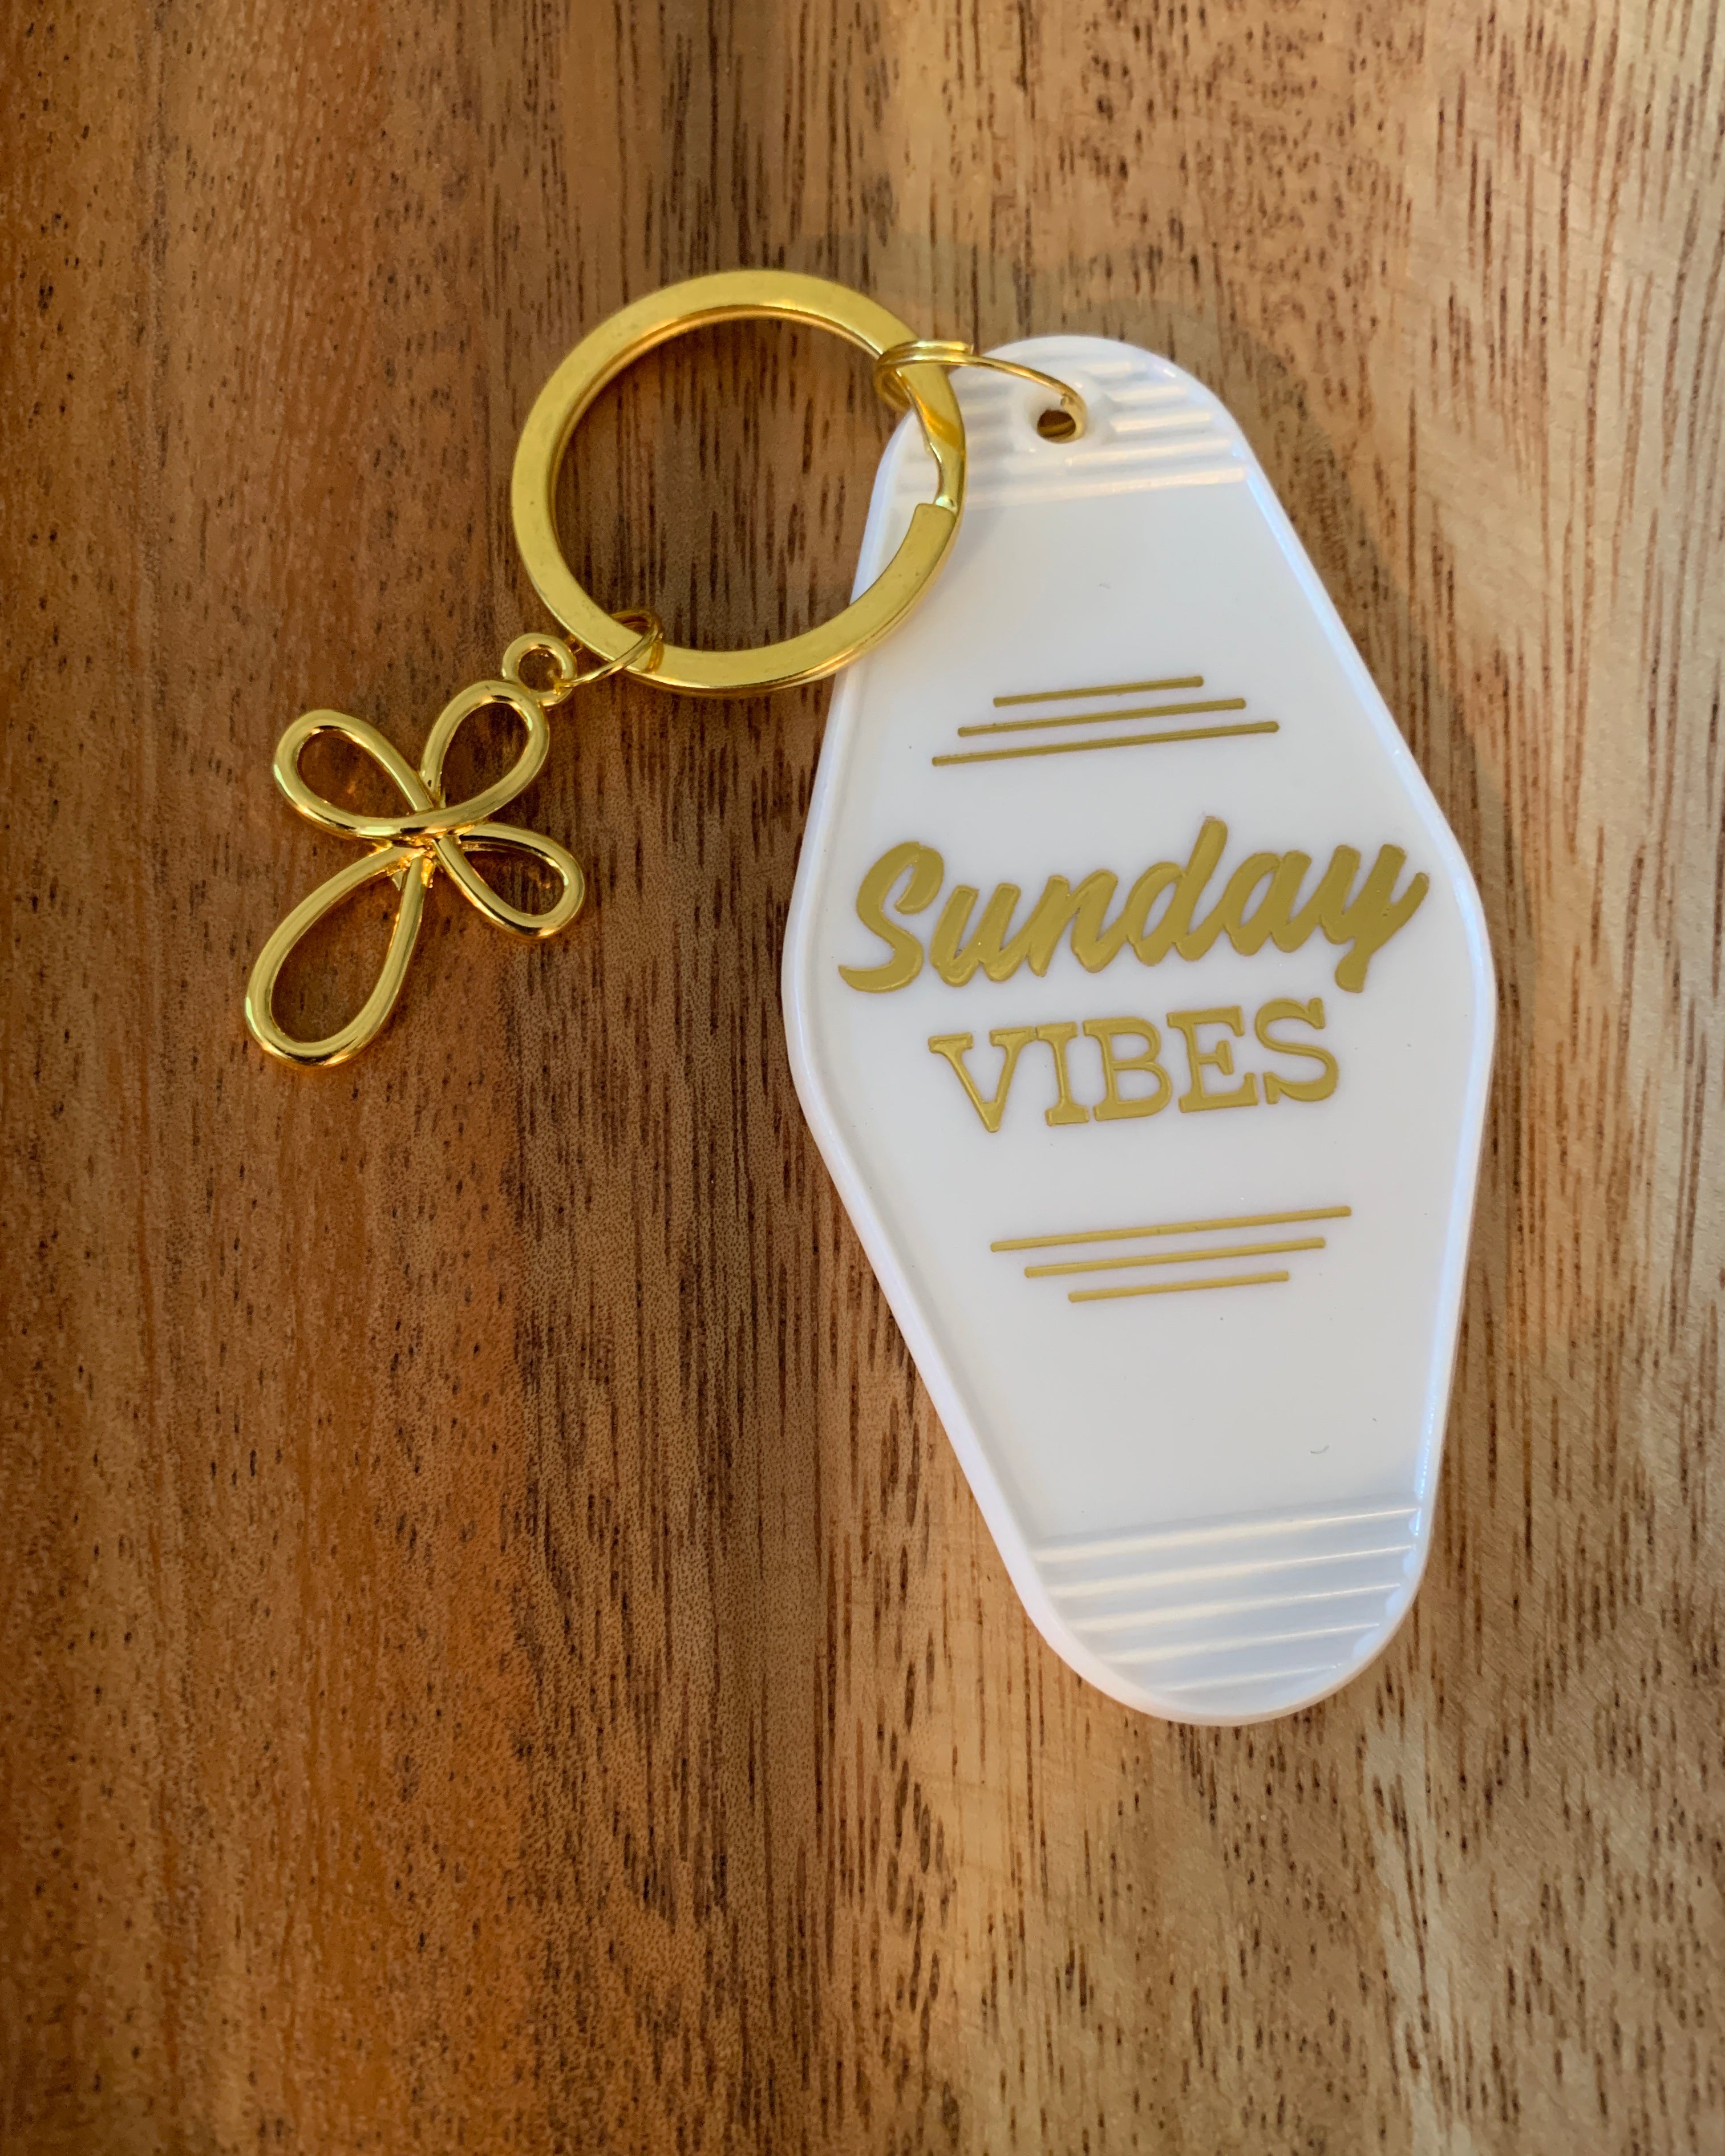 Sunday Vibes - Motel Key Tag.